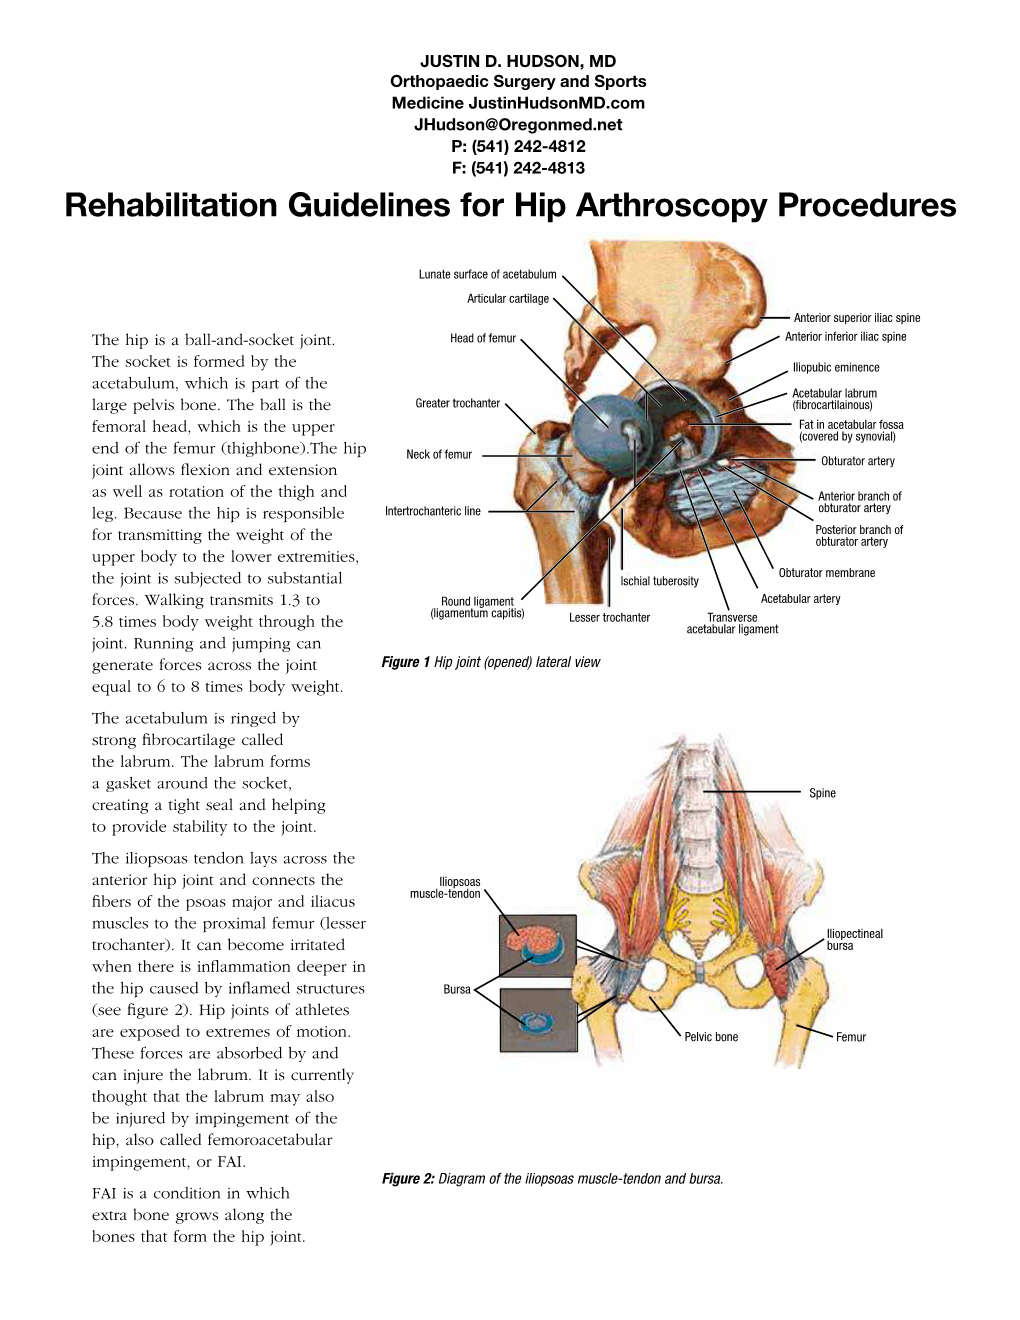 Rehabilitation Guidelines for Hip Arthroscopy Procedures